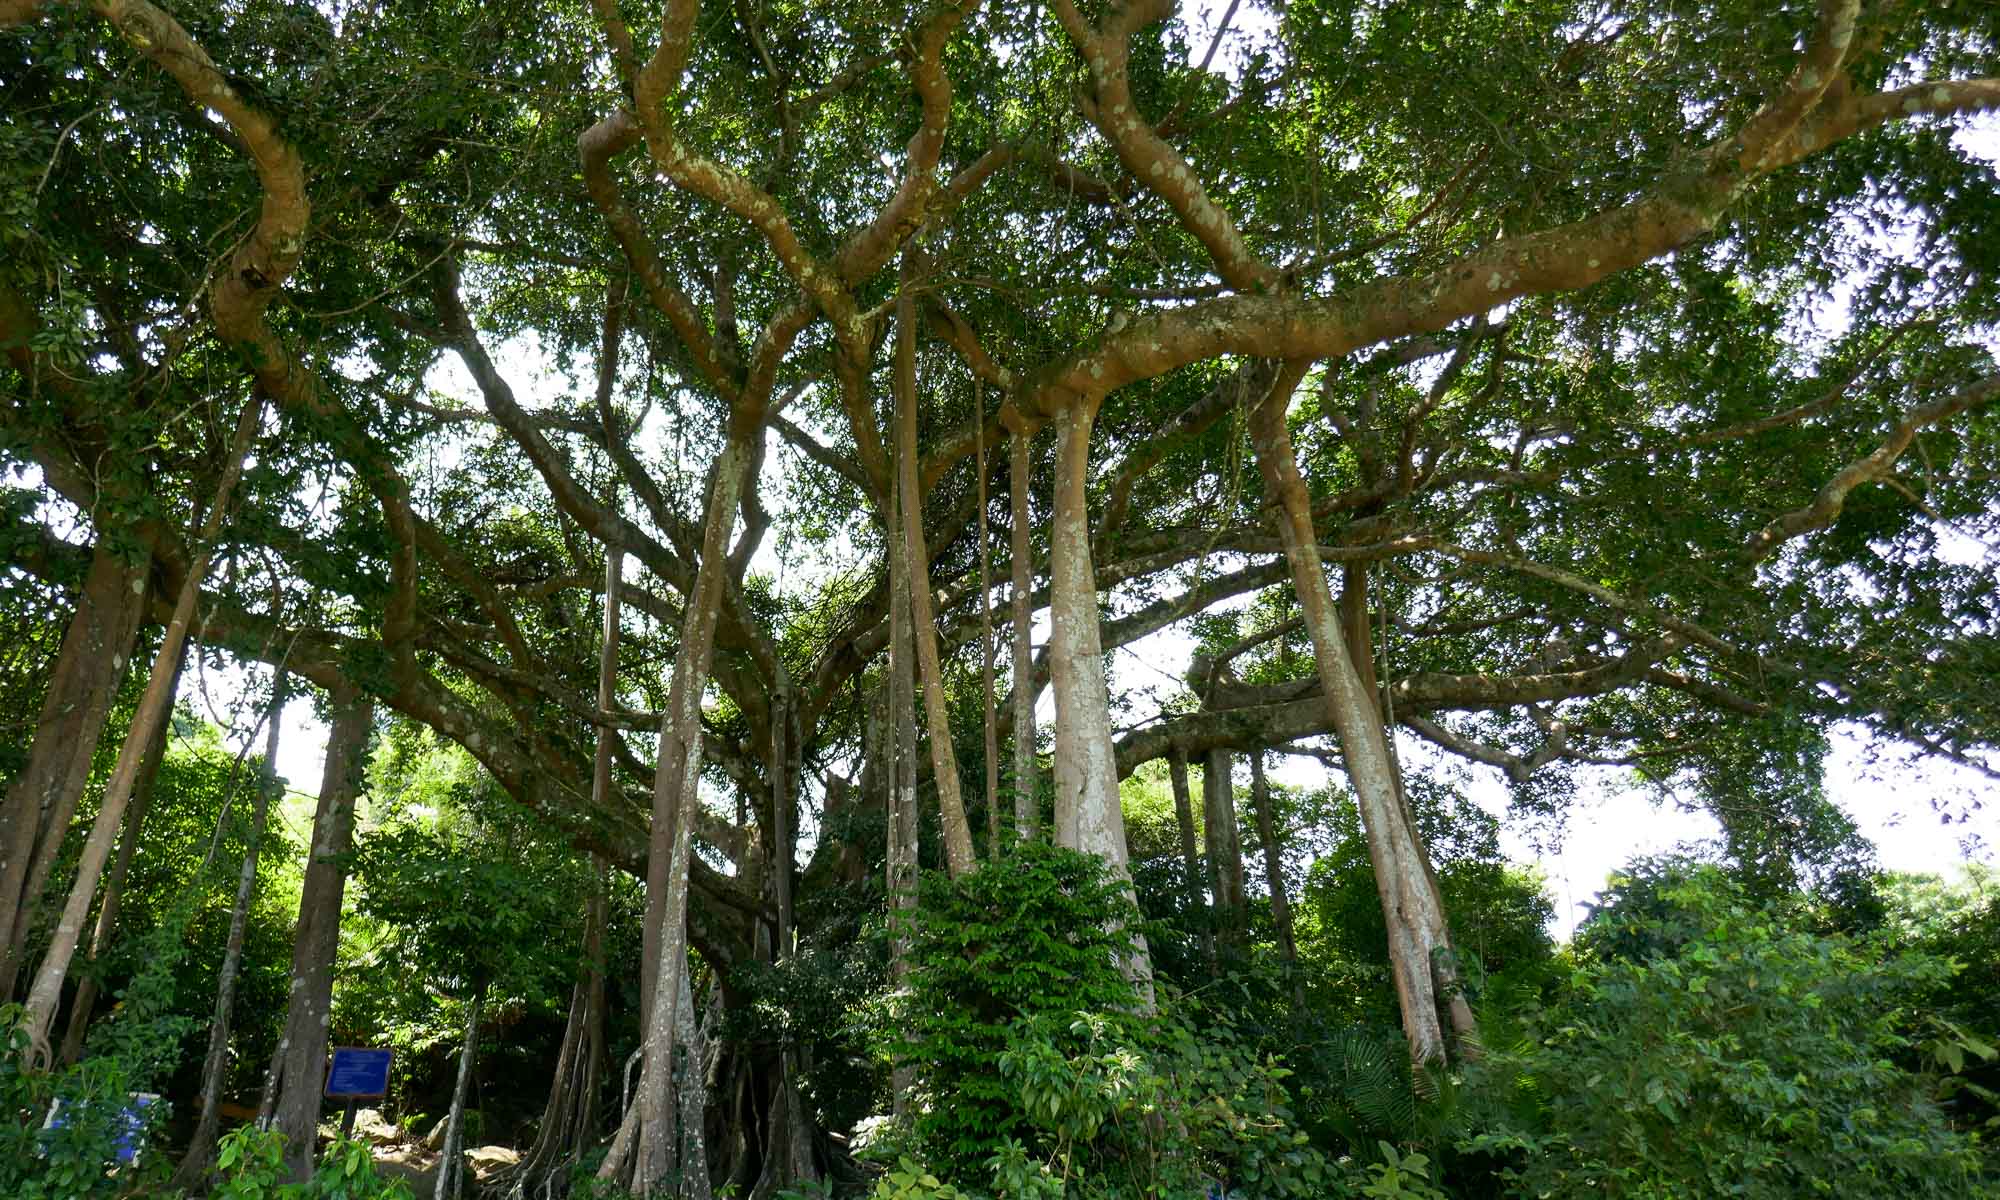 The 1,000 year old banyan tree